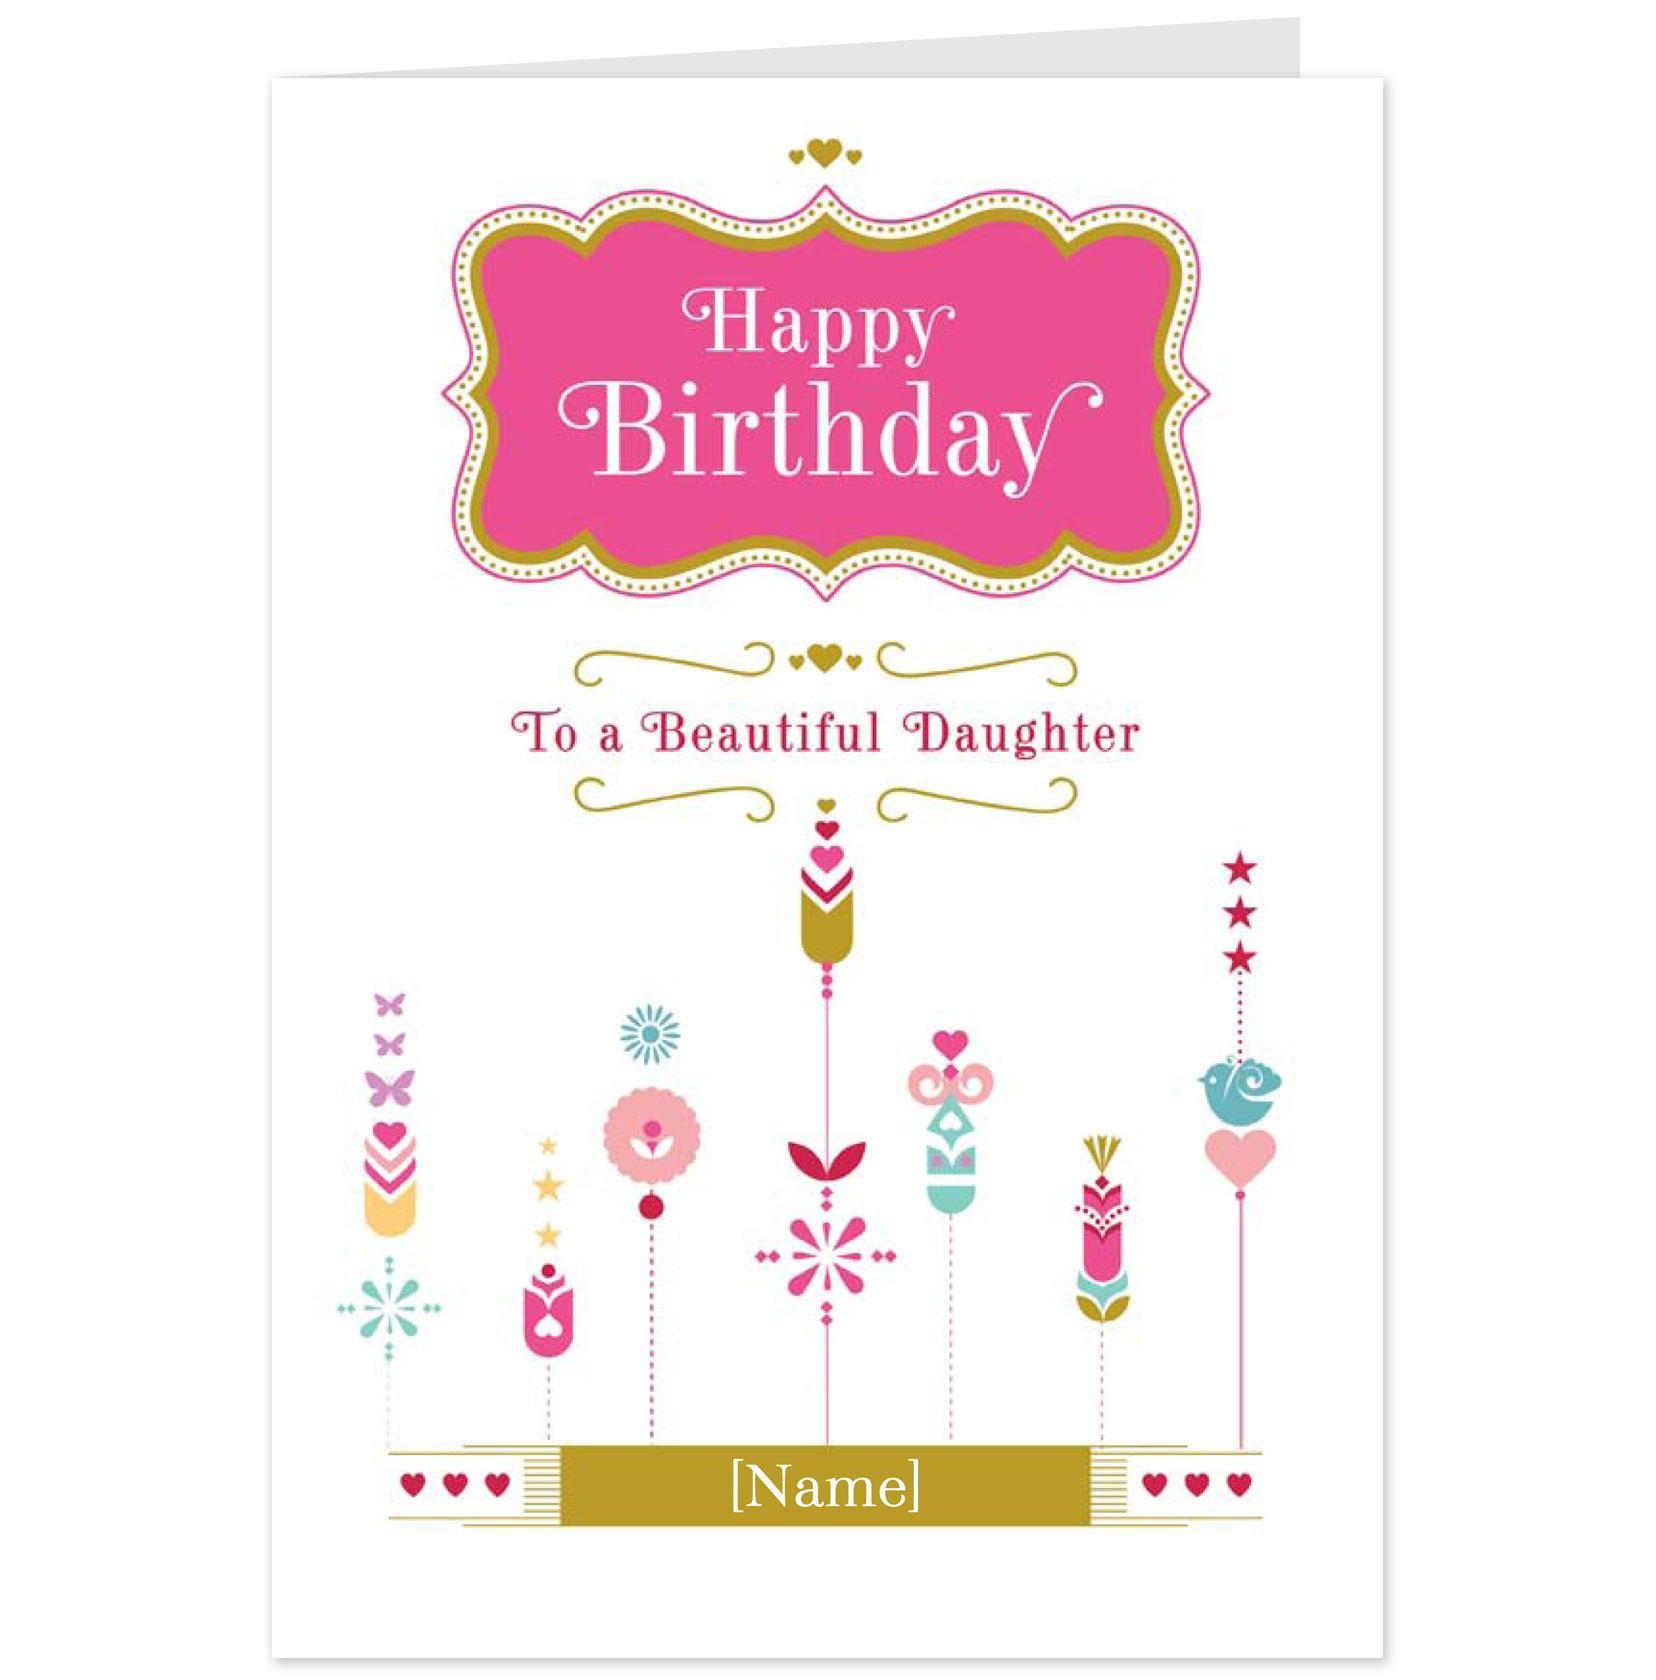 Free Printable Hallmark Birthday Cards Awesome Design Hallmark Th - Free Printable Hallmark Birthday Cards